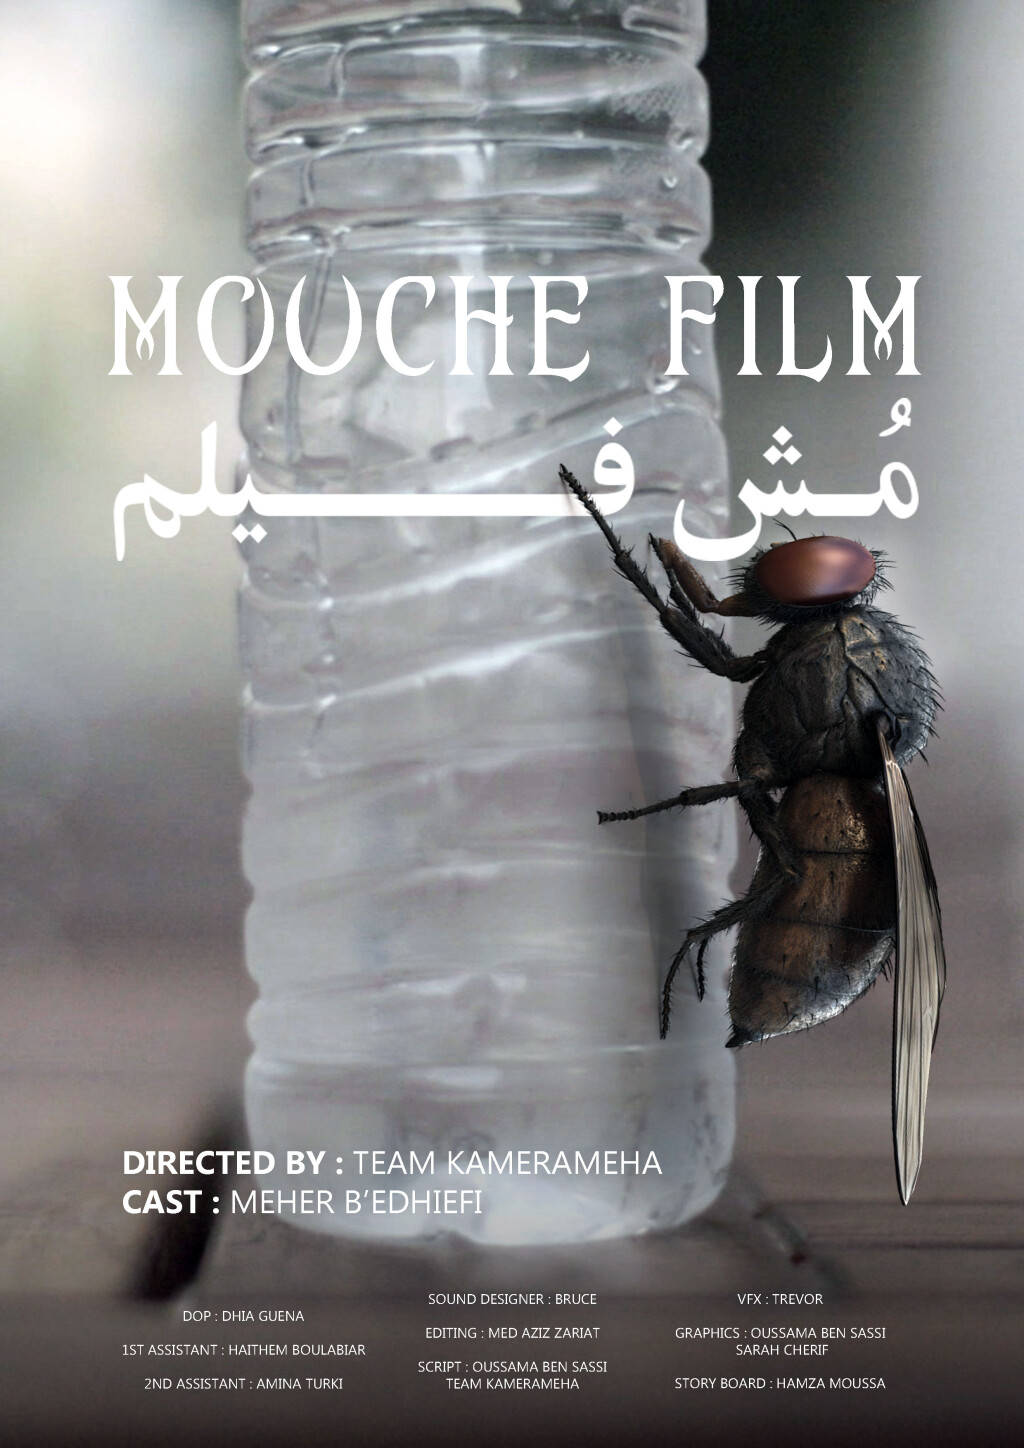 Filmposter for MOUCHE FILM